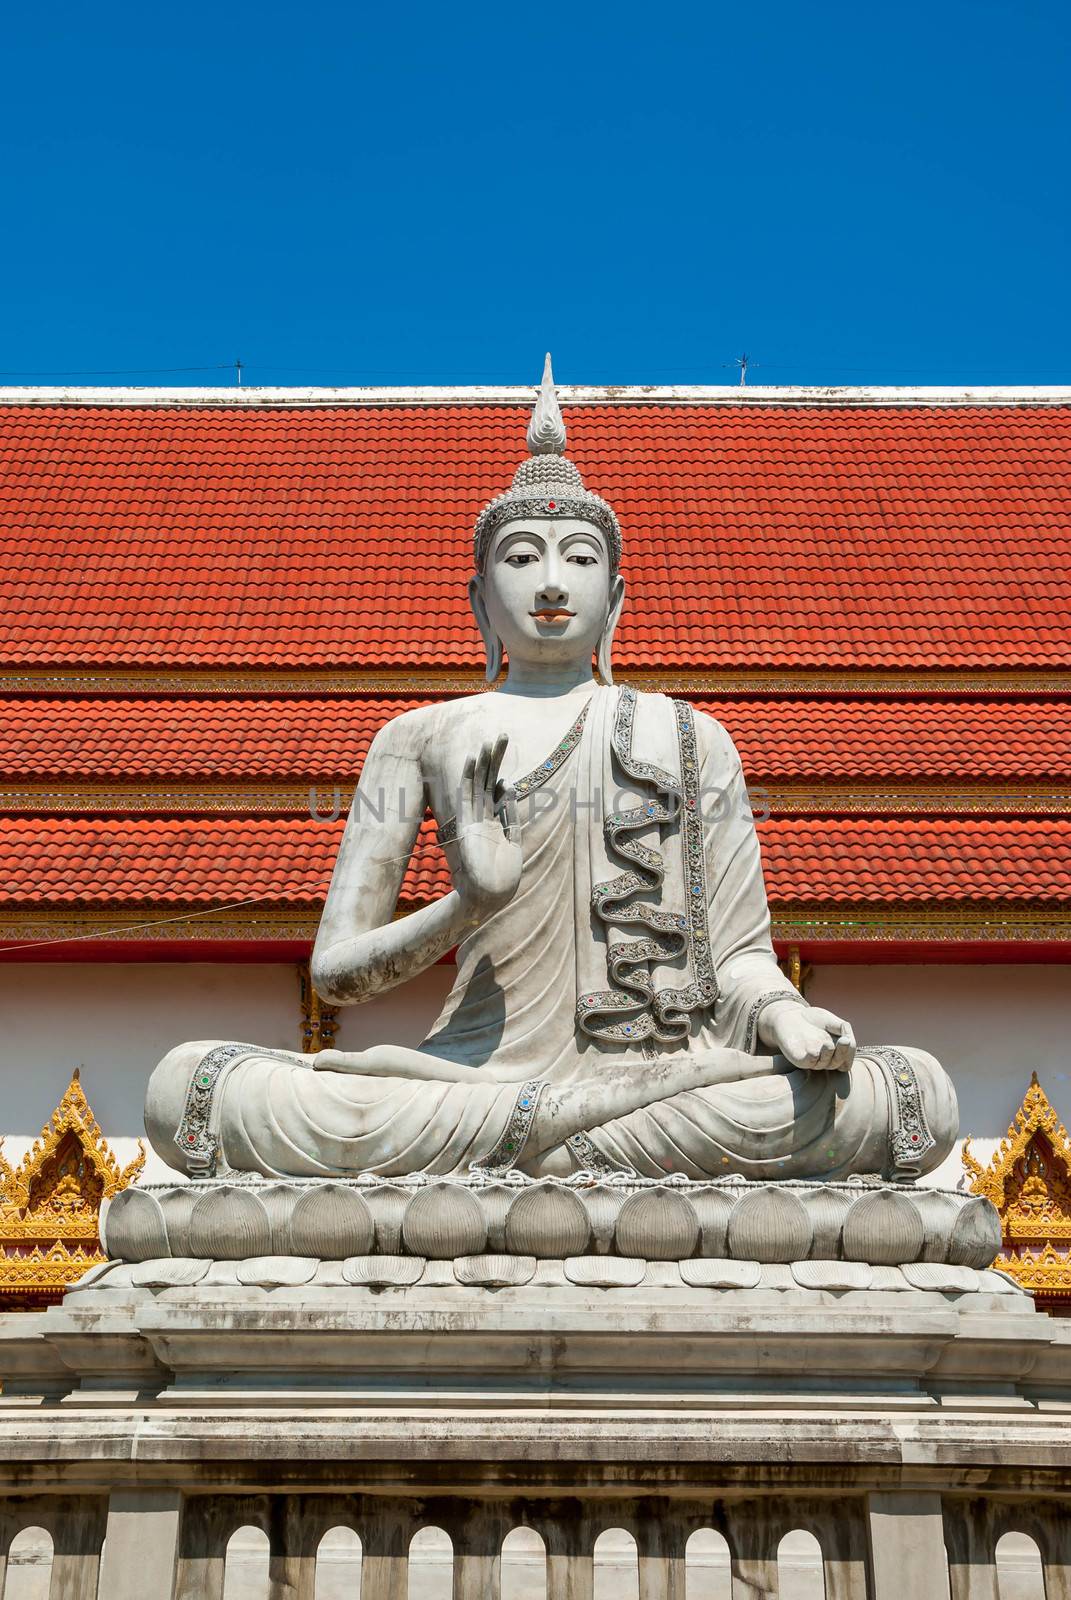 Big buddha image statue sitting at thai temple.